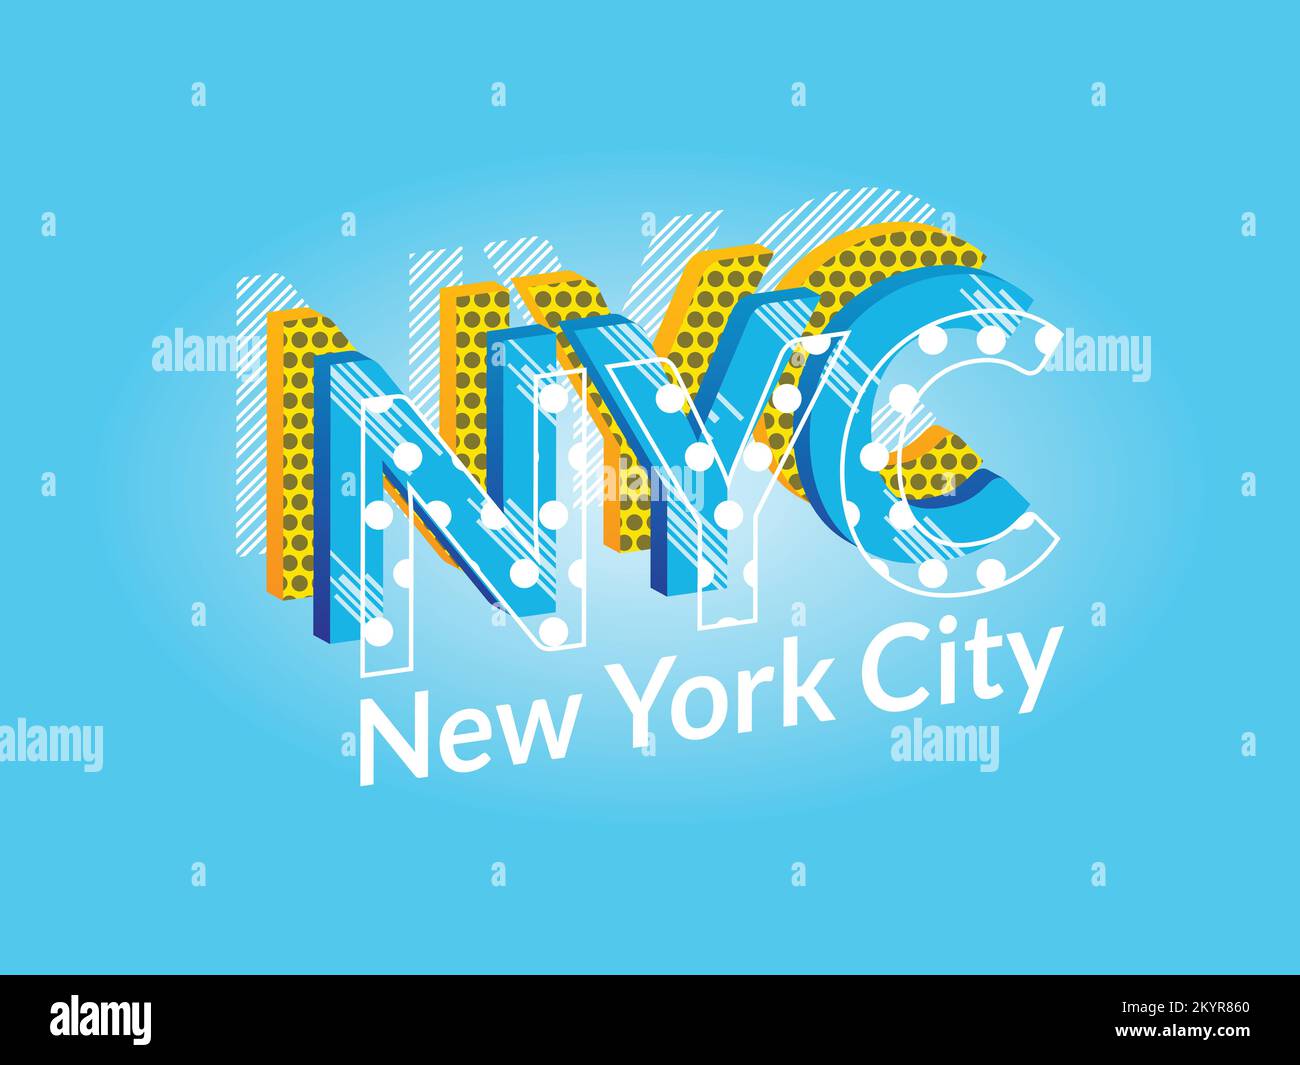 Illustrative typography word art design. NYC: New York City. Stock Vector